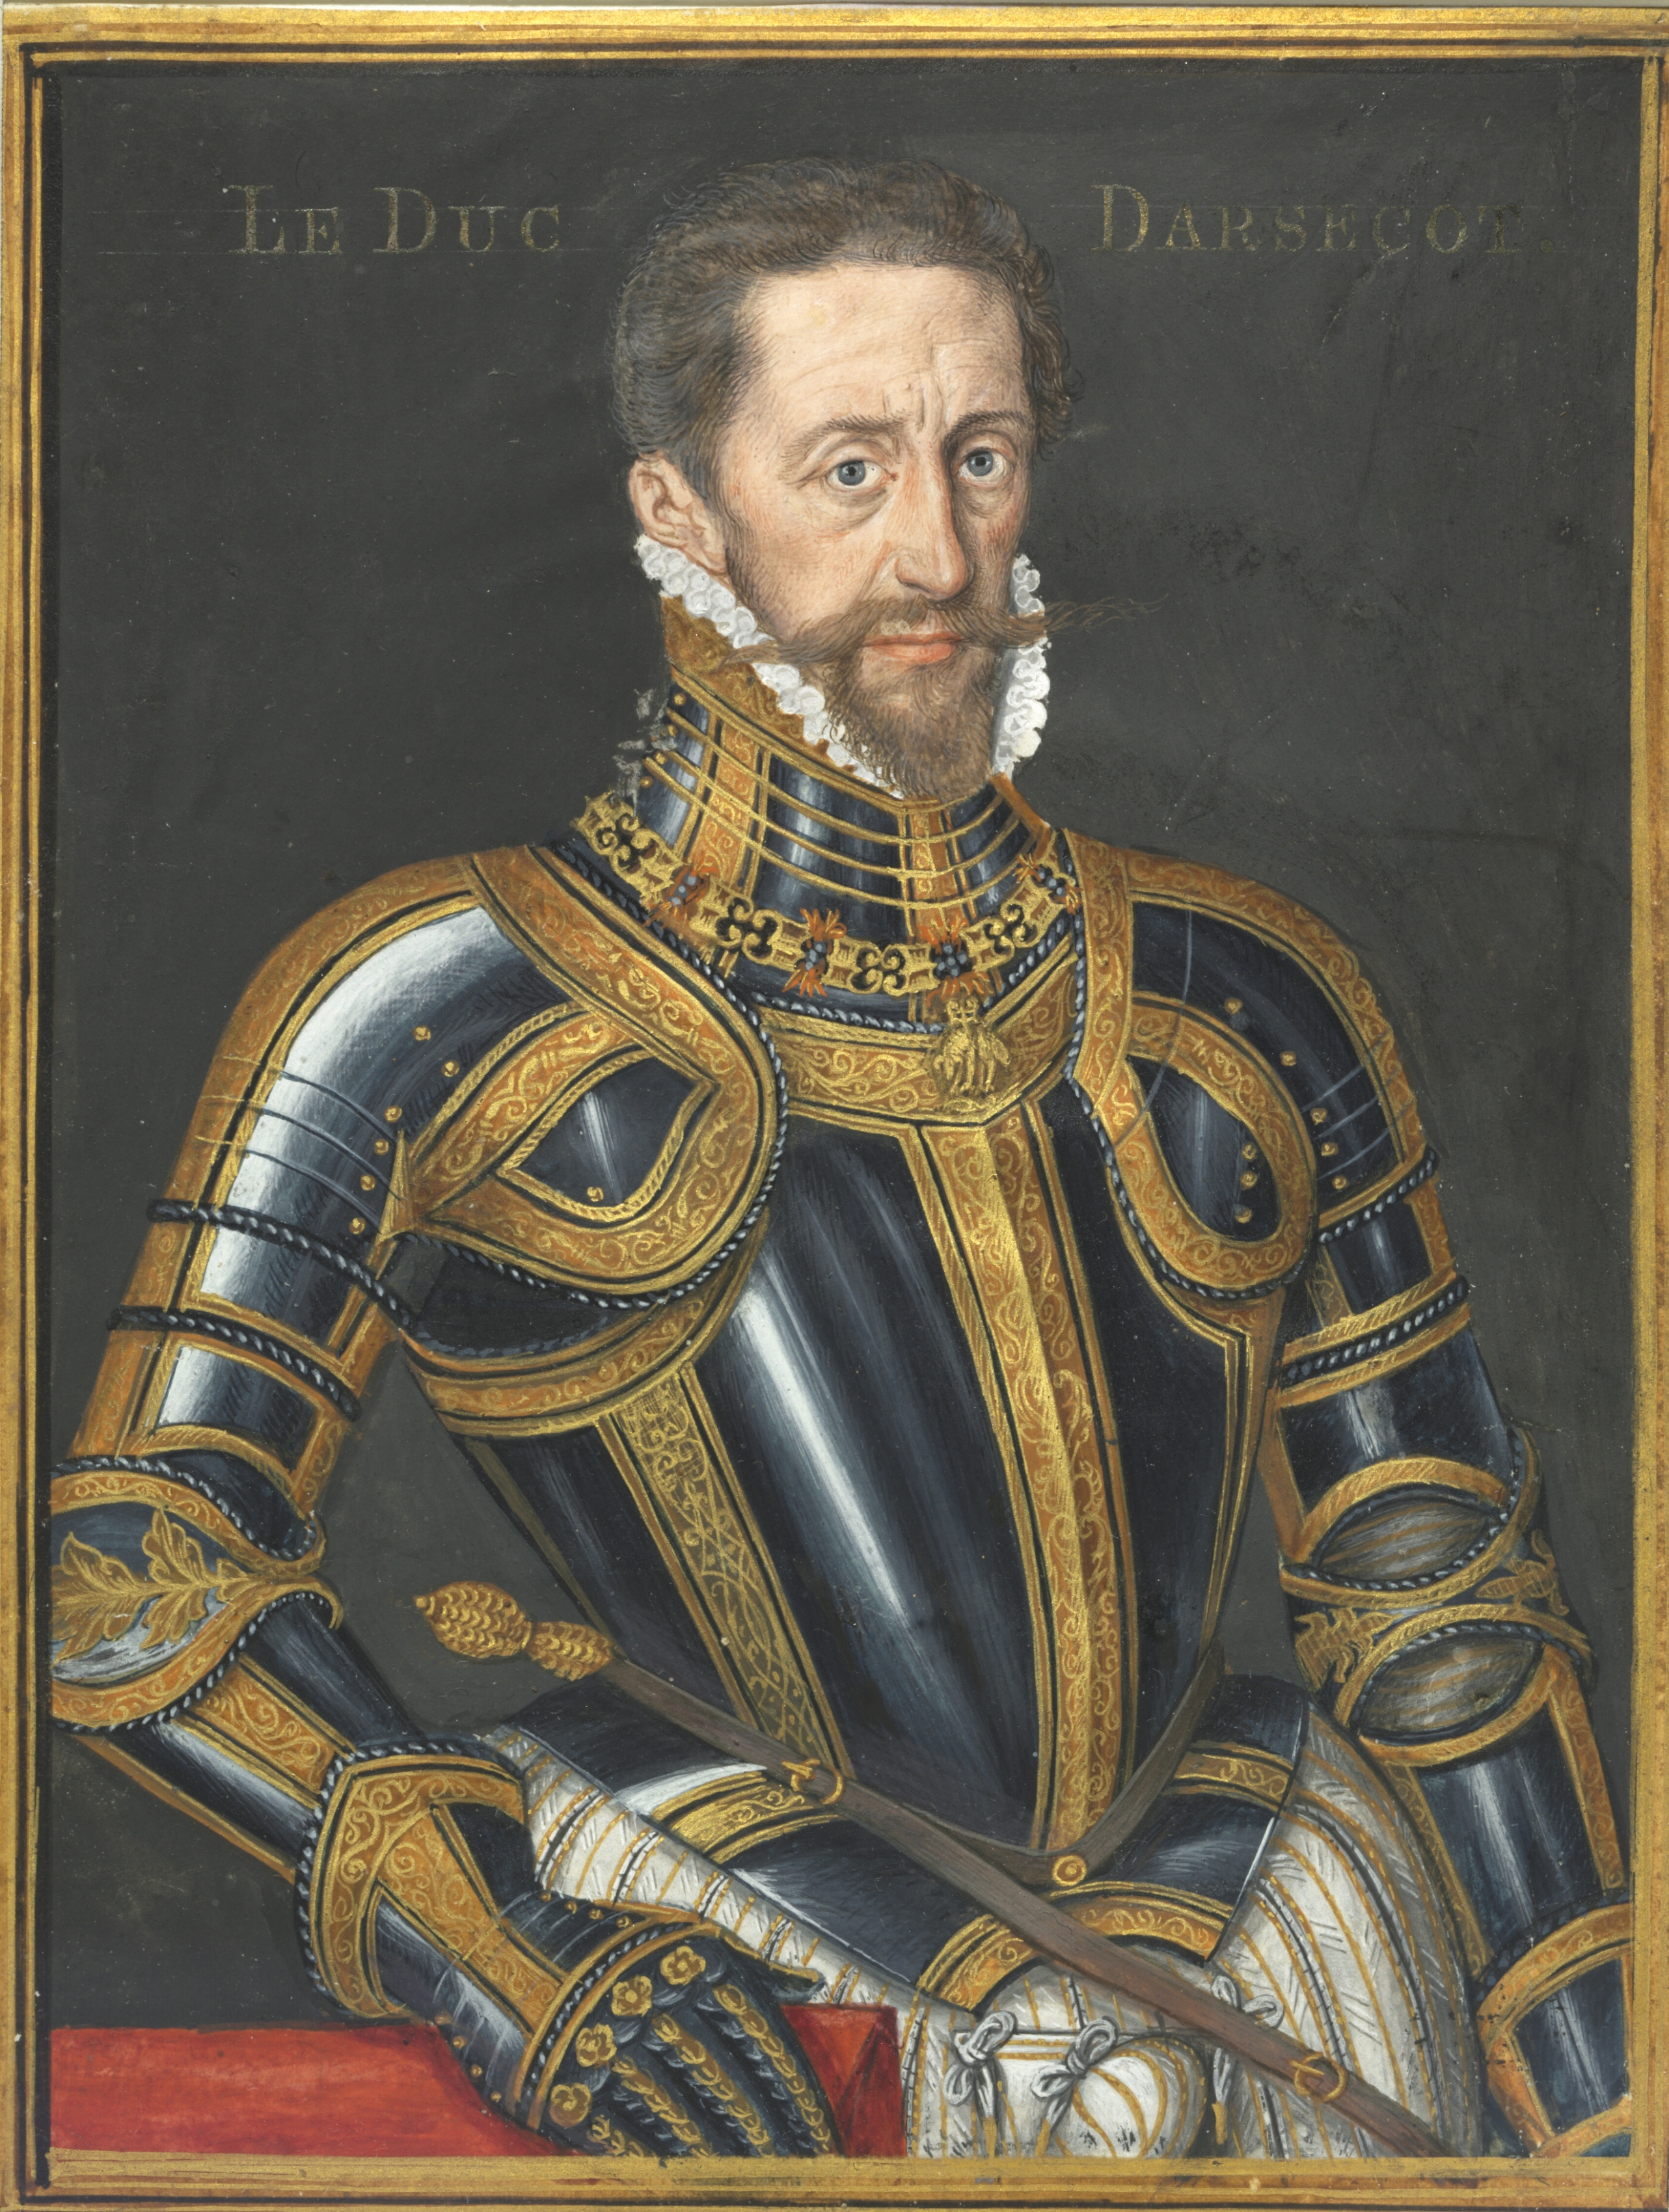 Portrait of Philippe de Croy, Duke of Aerschot